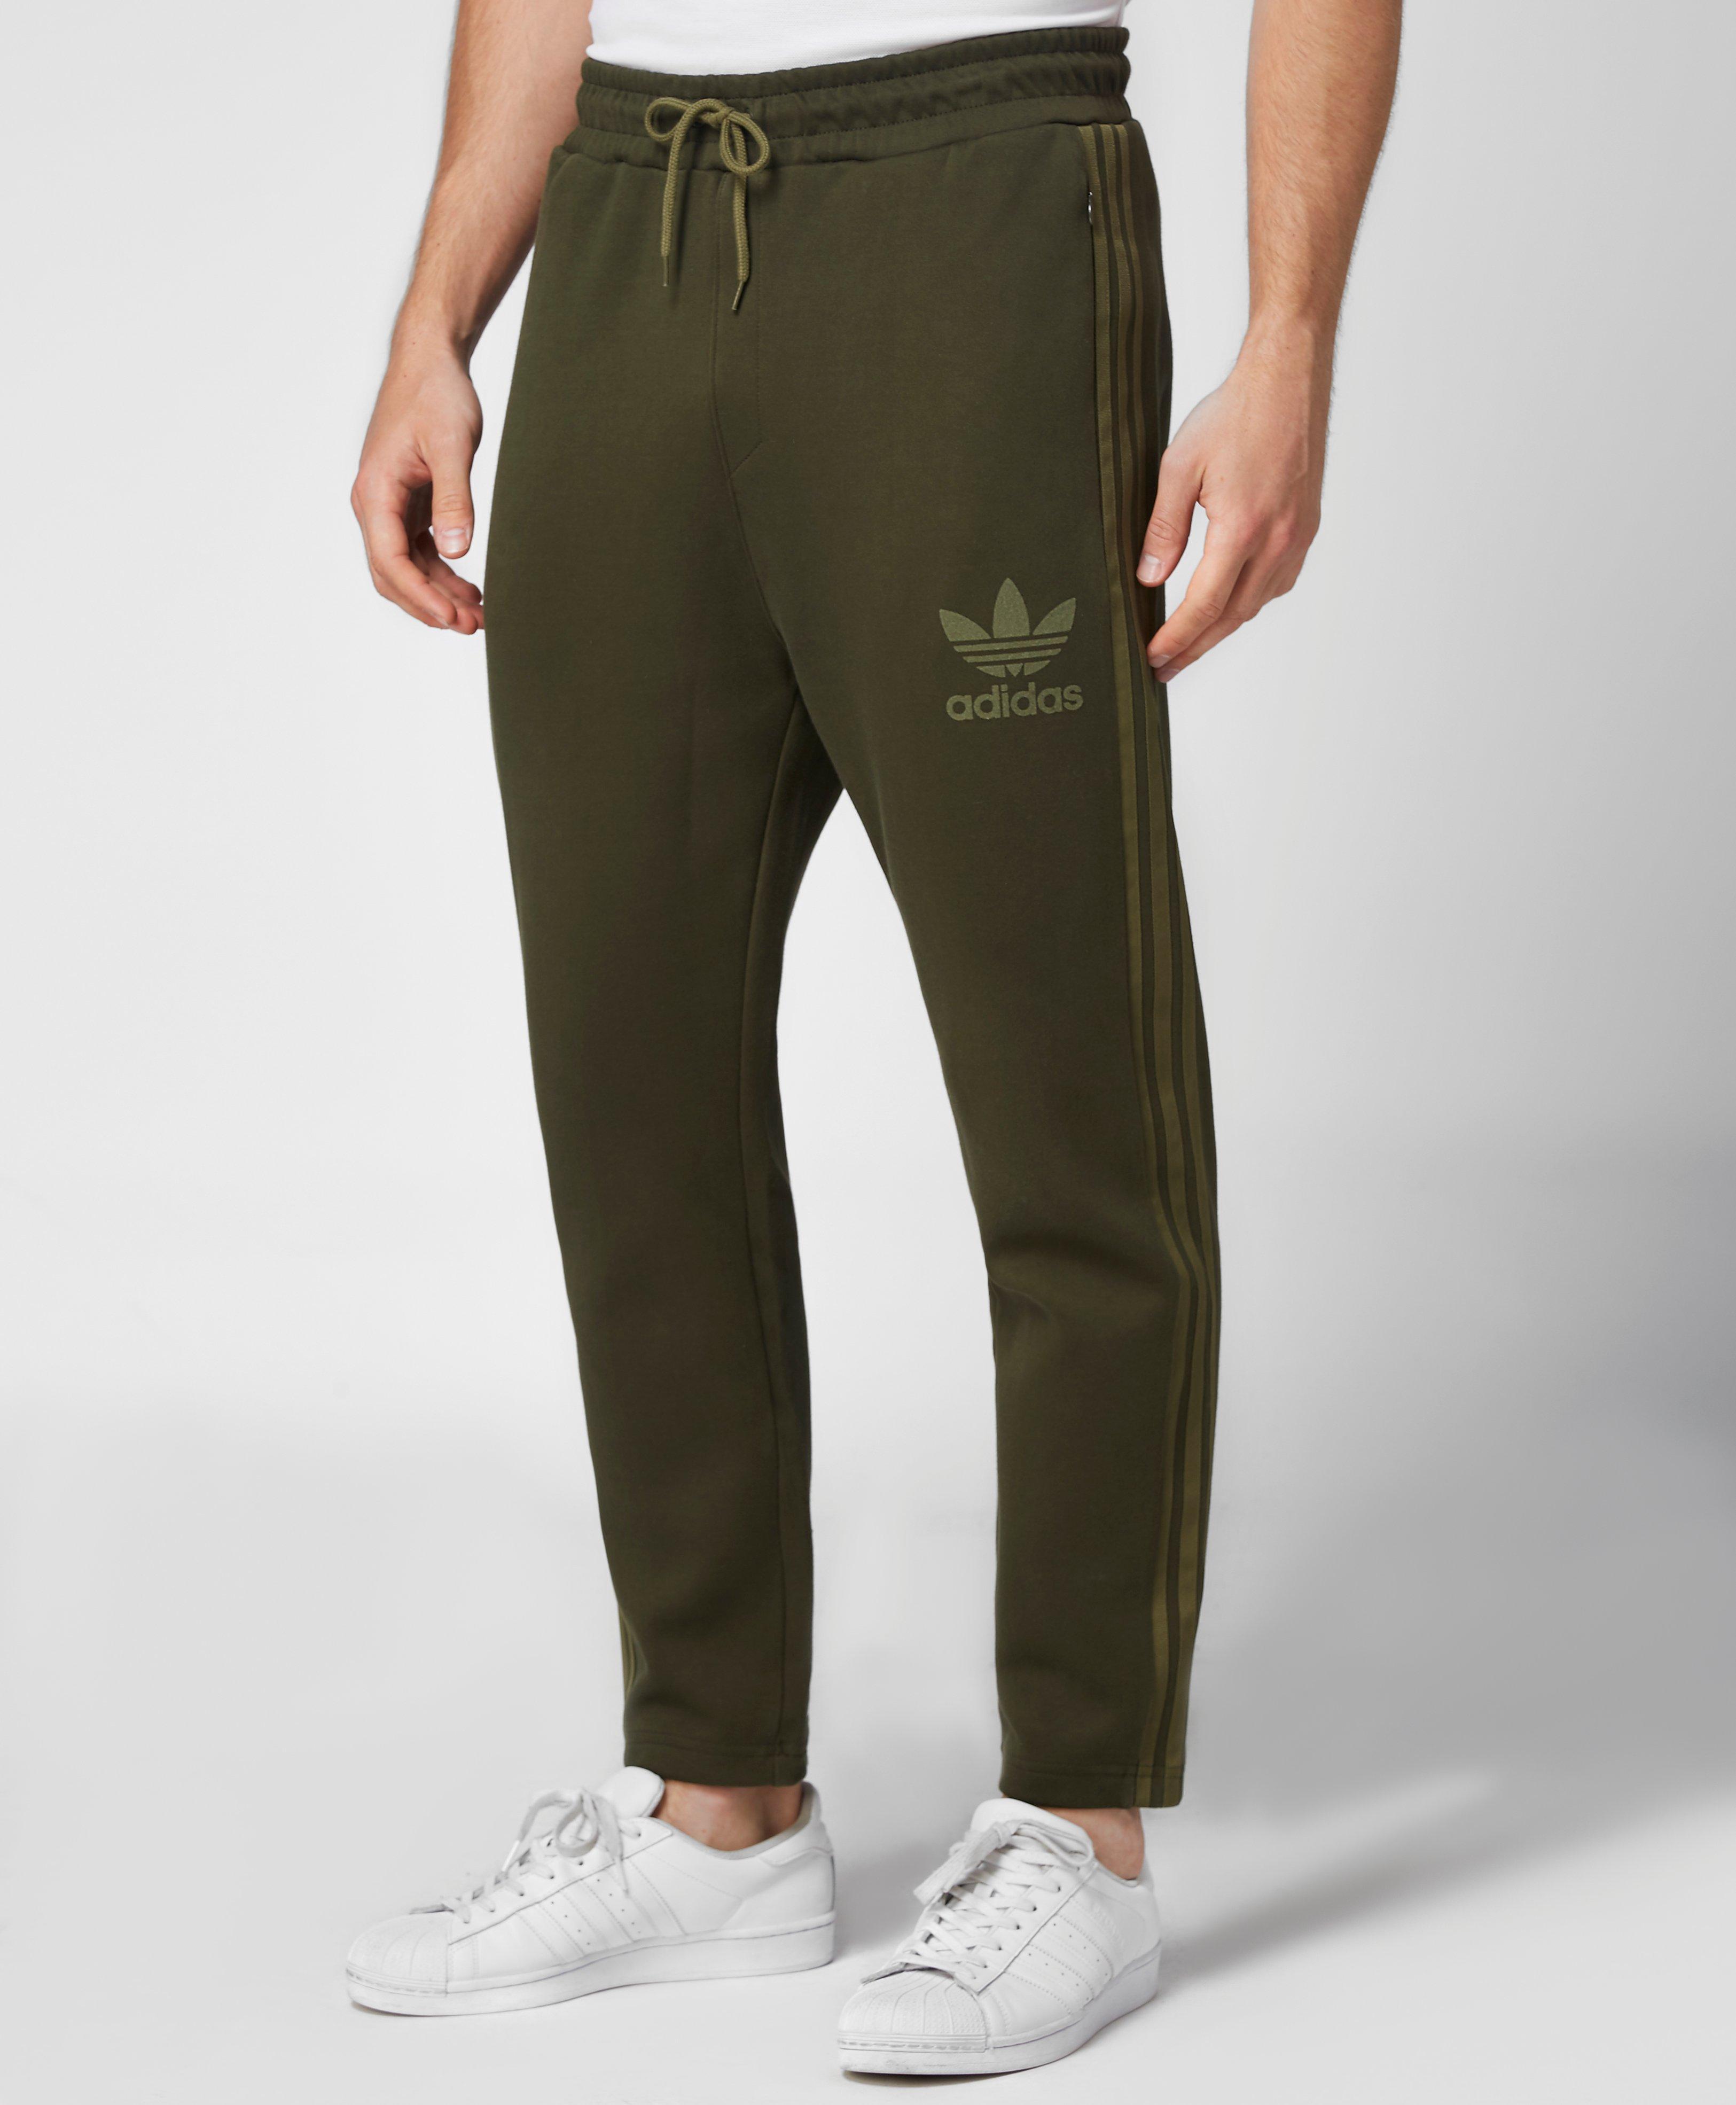 adidas Originals Cotton Adicolor Skinny Track Pants in Green for Men - Lyst